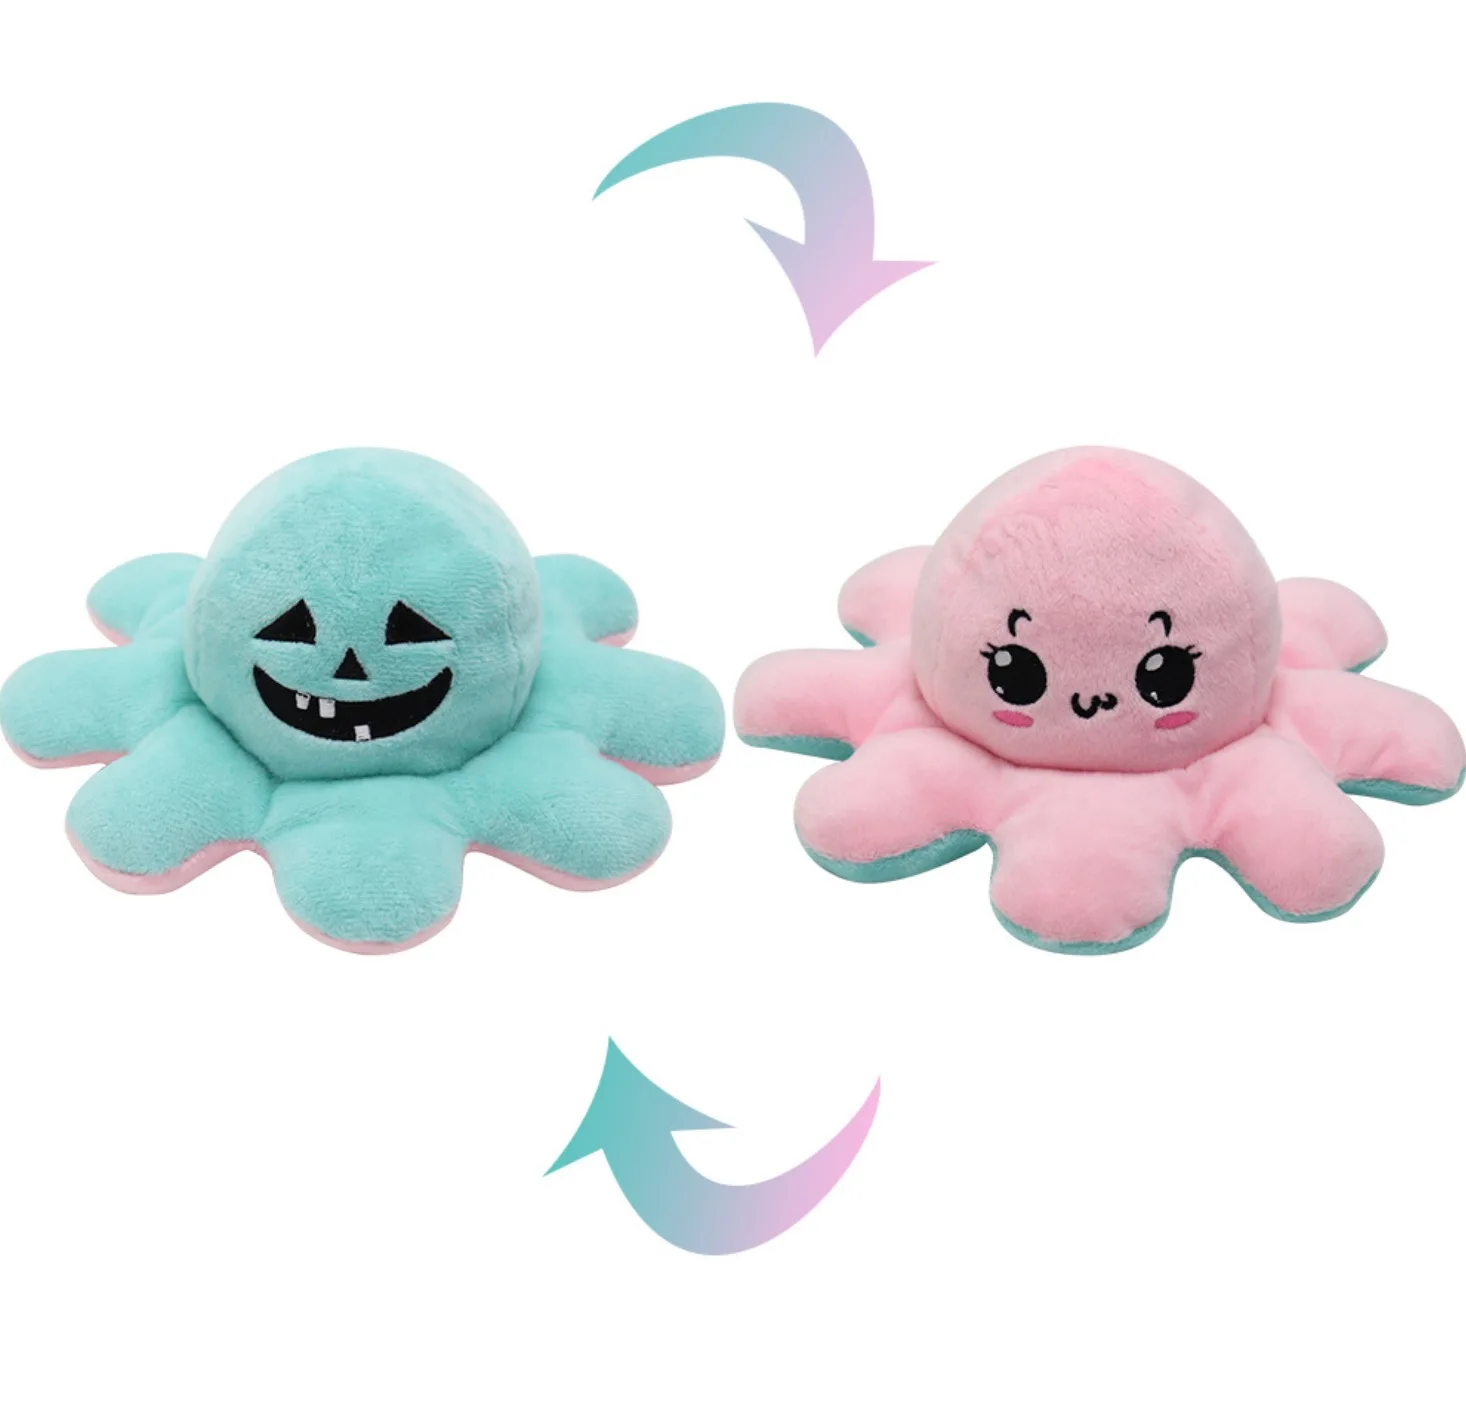 
Custom Good Quality New Double-Sided Cute Flip Reversible Reversive Octopus Plush Toy 